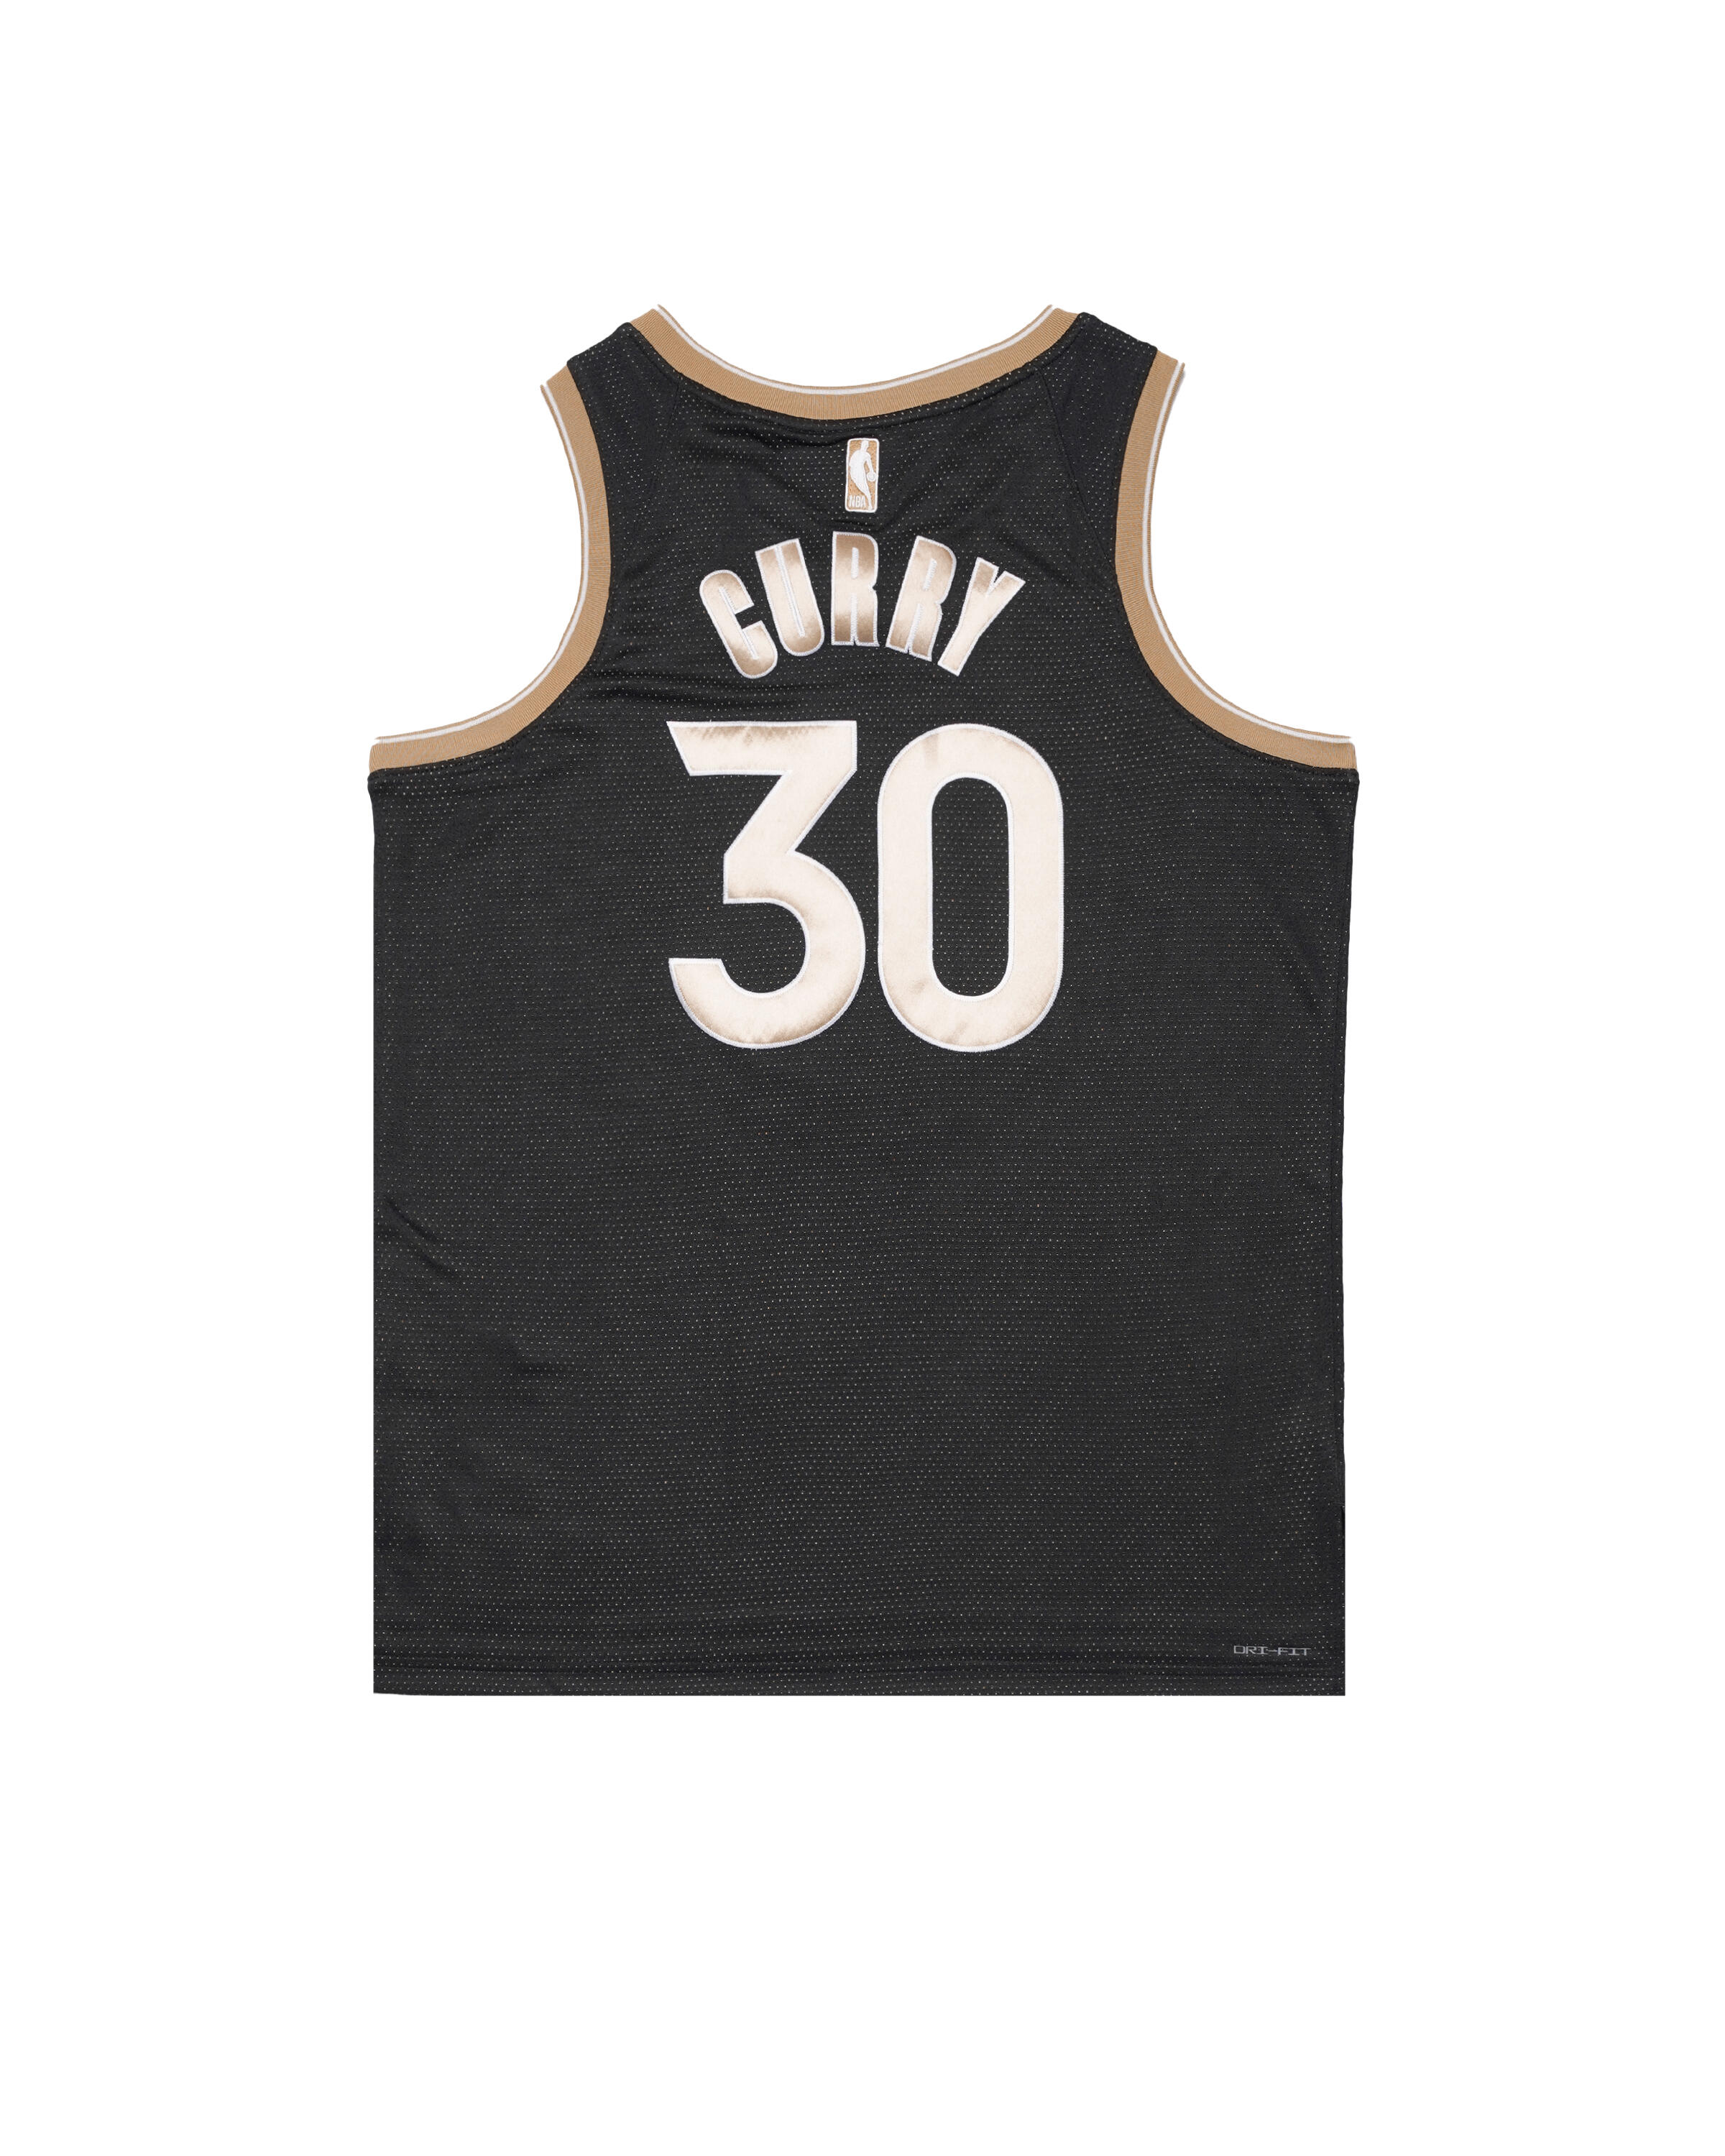 Nike Swingman Jersey - Golden State Warriors 'Stephen Curry'